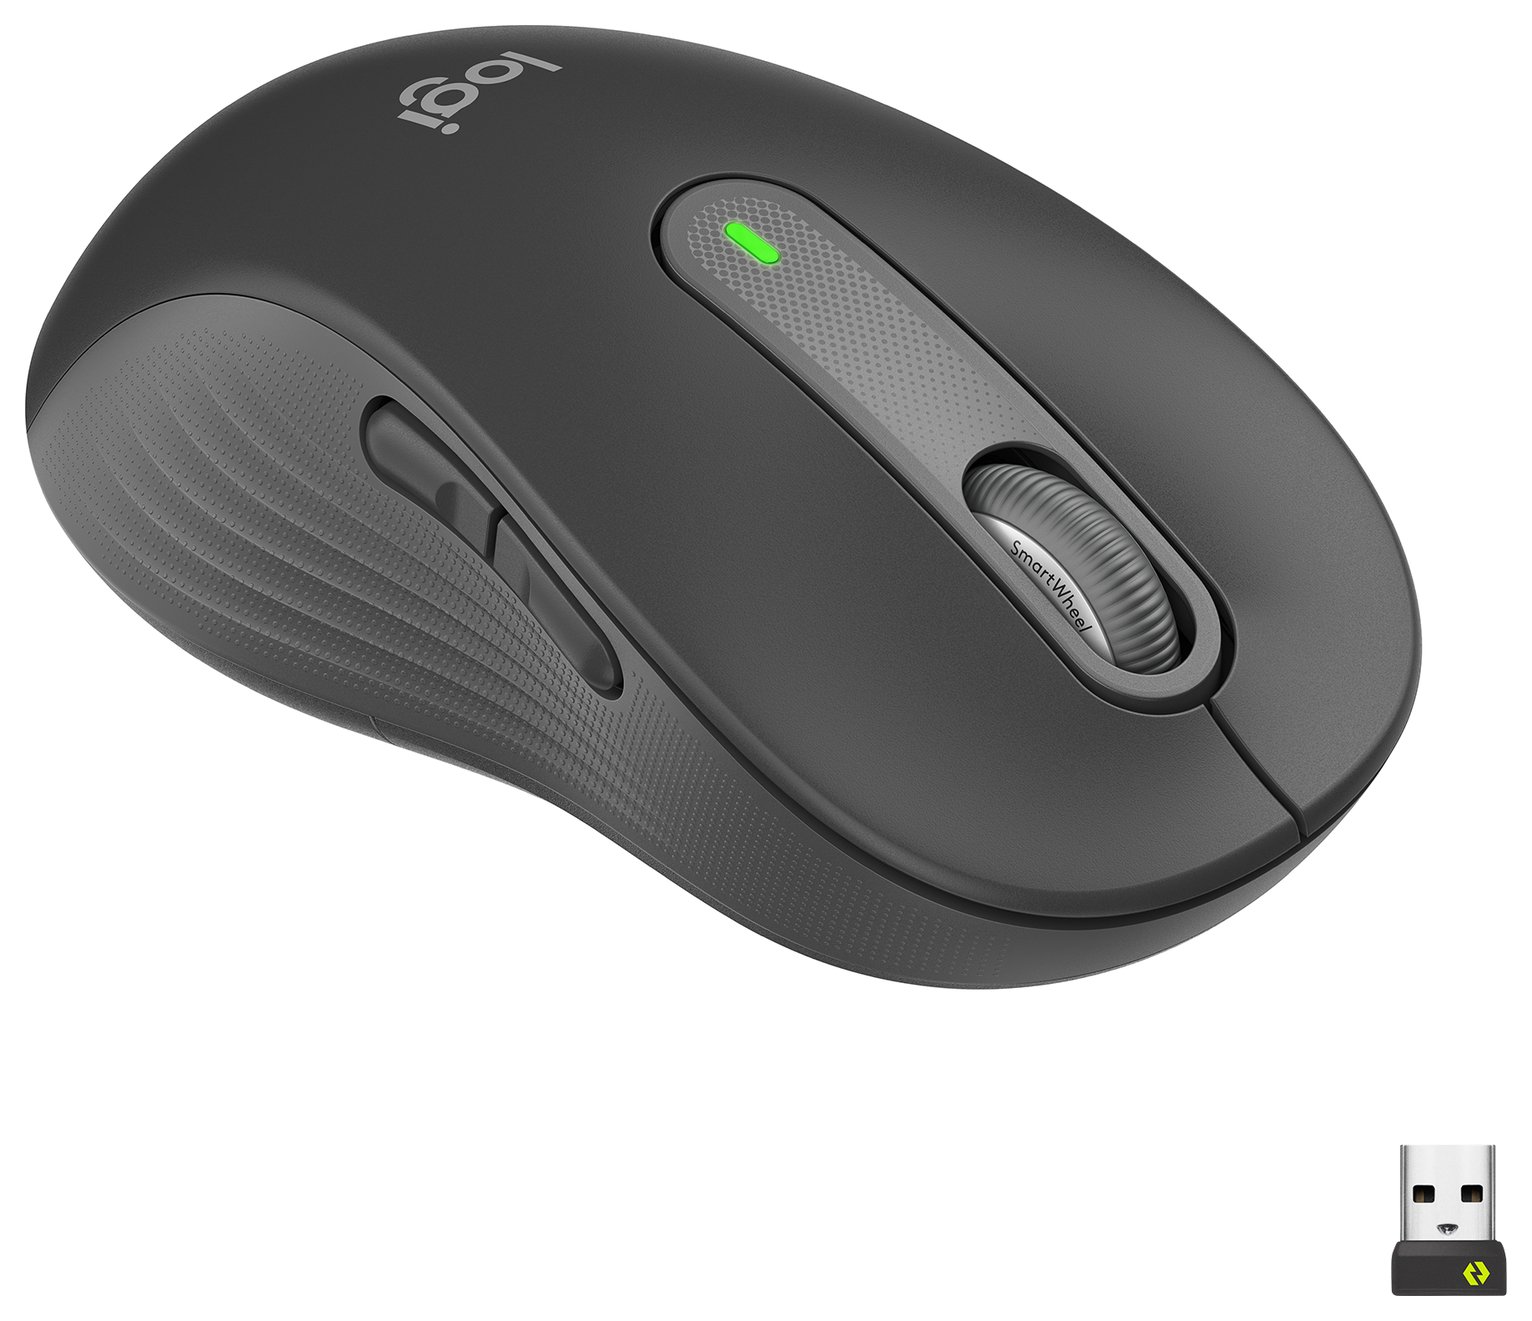 Logitech M650 Left Handed Wireless Mouse - Black